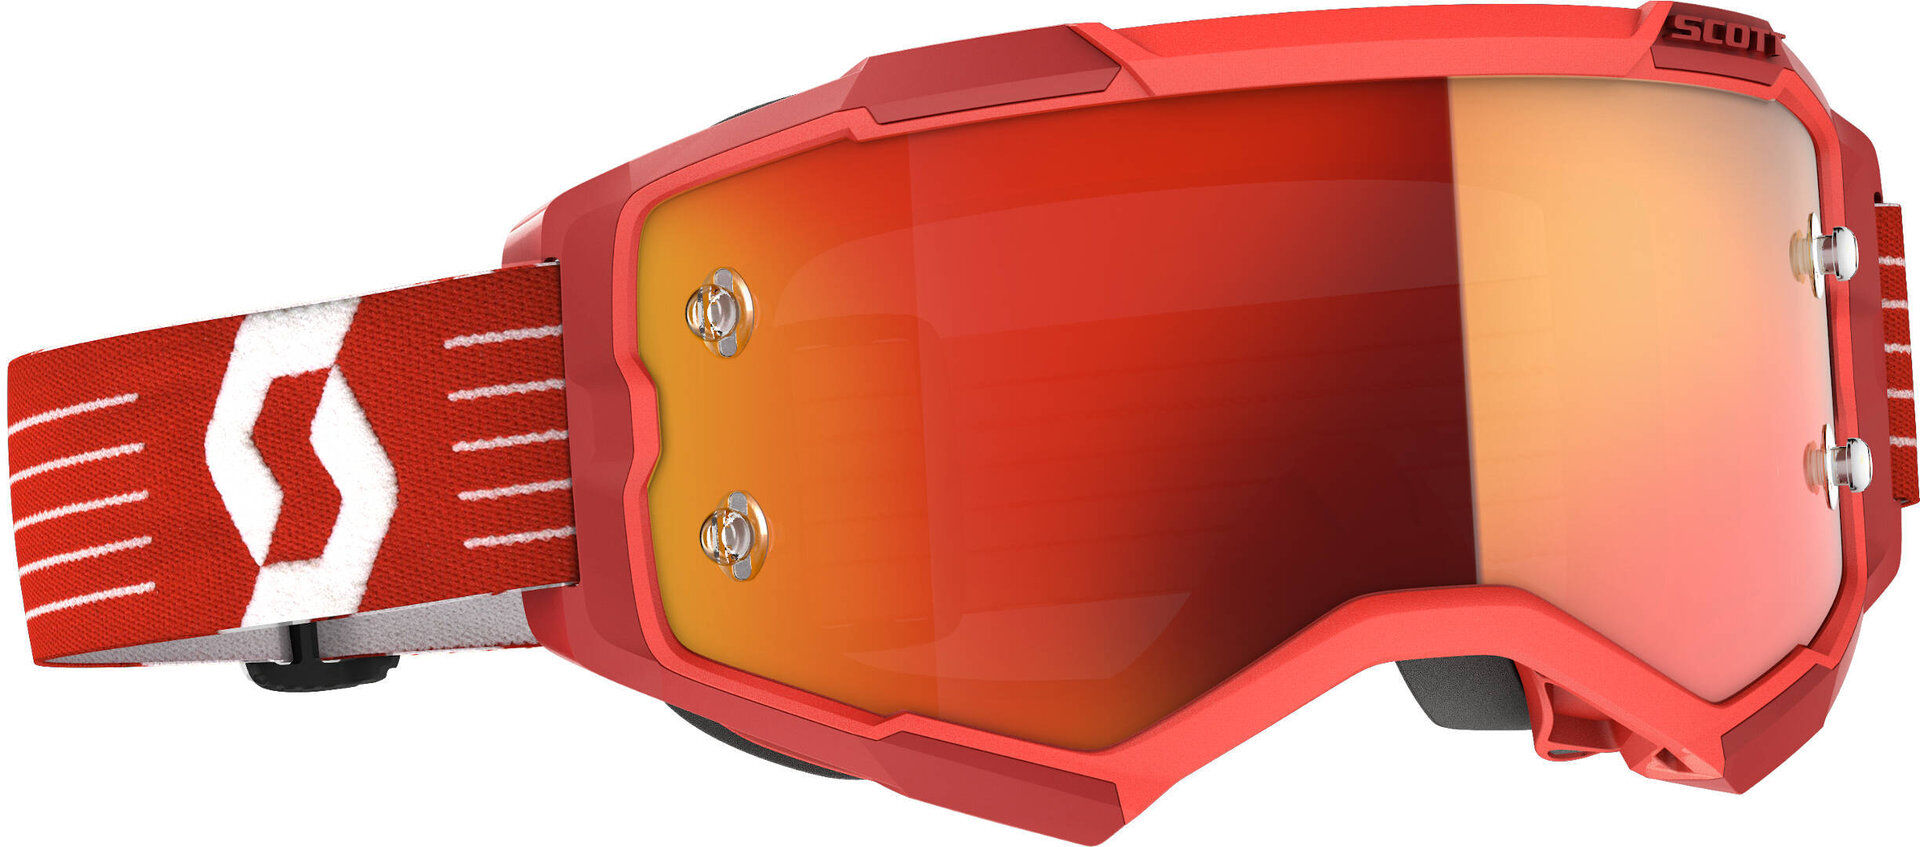 Scott Fury gafas rojas de Motocross - Rojo (un tamaño)